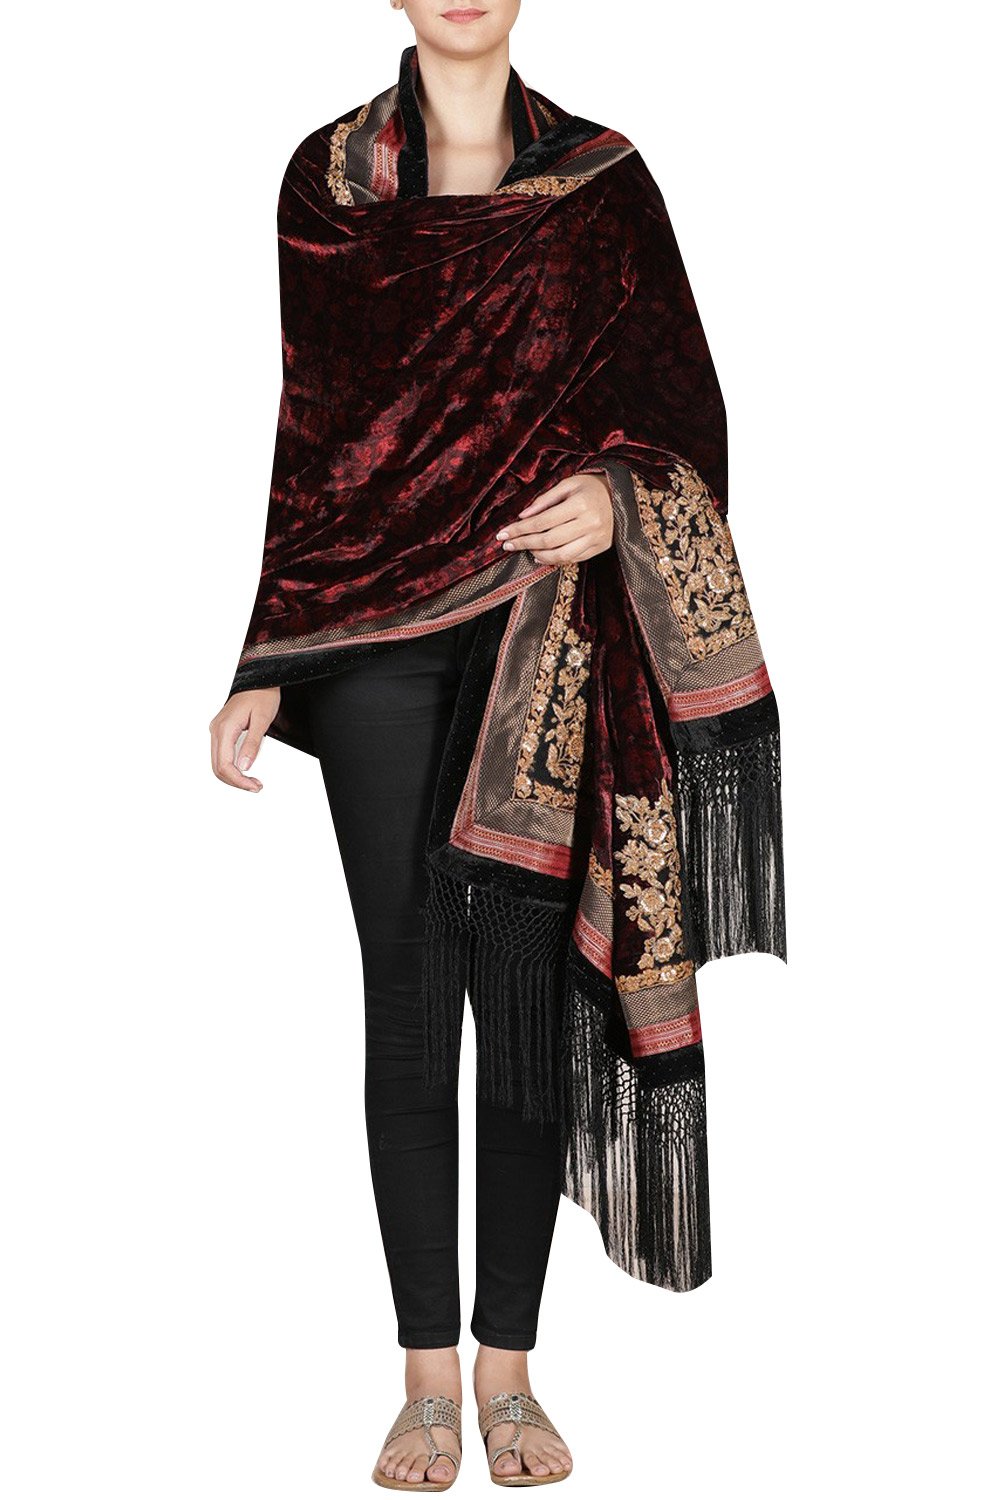 Vrijlating echtgenoot stereo Burgundy velvet shawl by RI Ritu Kumar | Carmaonline shop